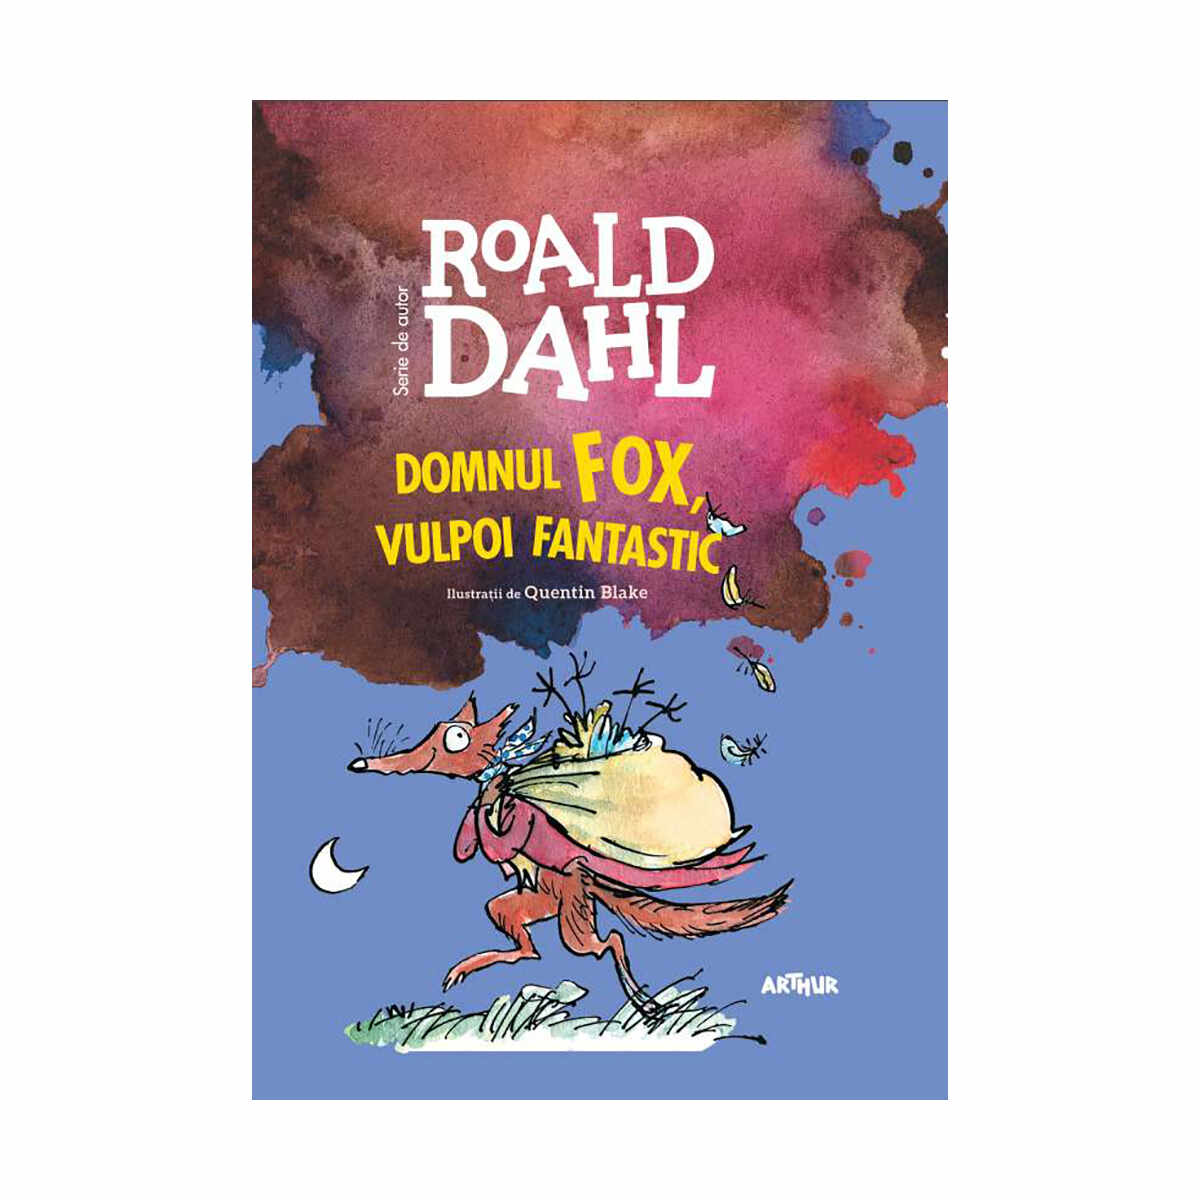 Carte Editura Arthur, Domul Fox, vulpoi fantastic, Roald Dahl